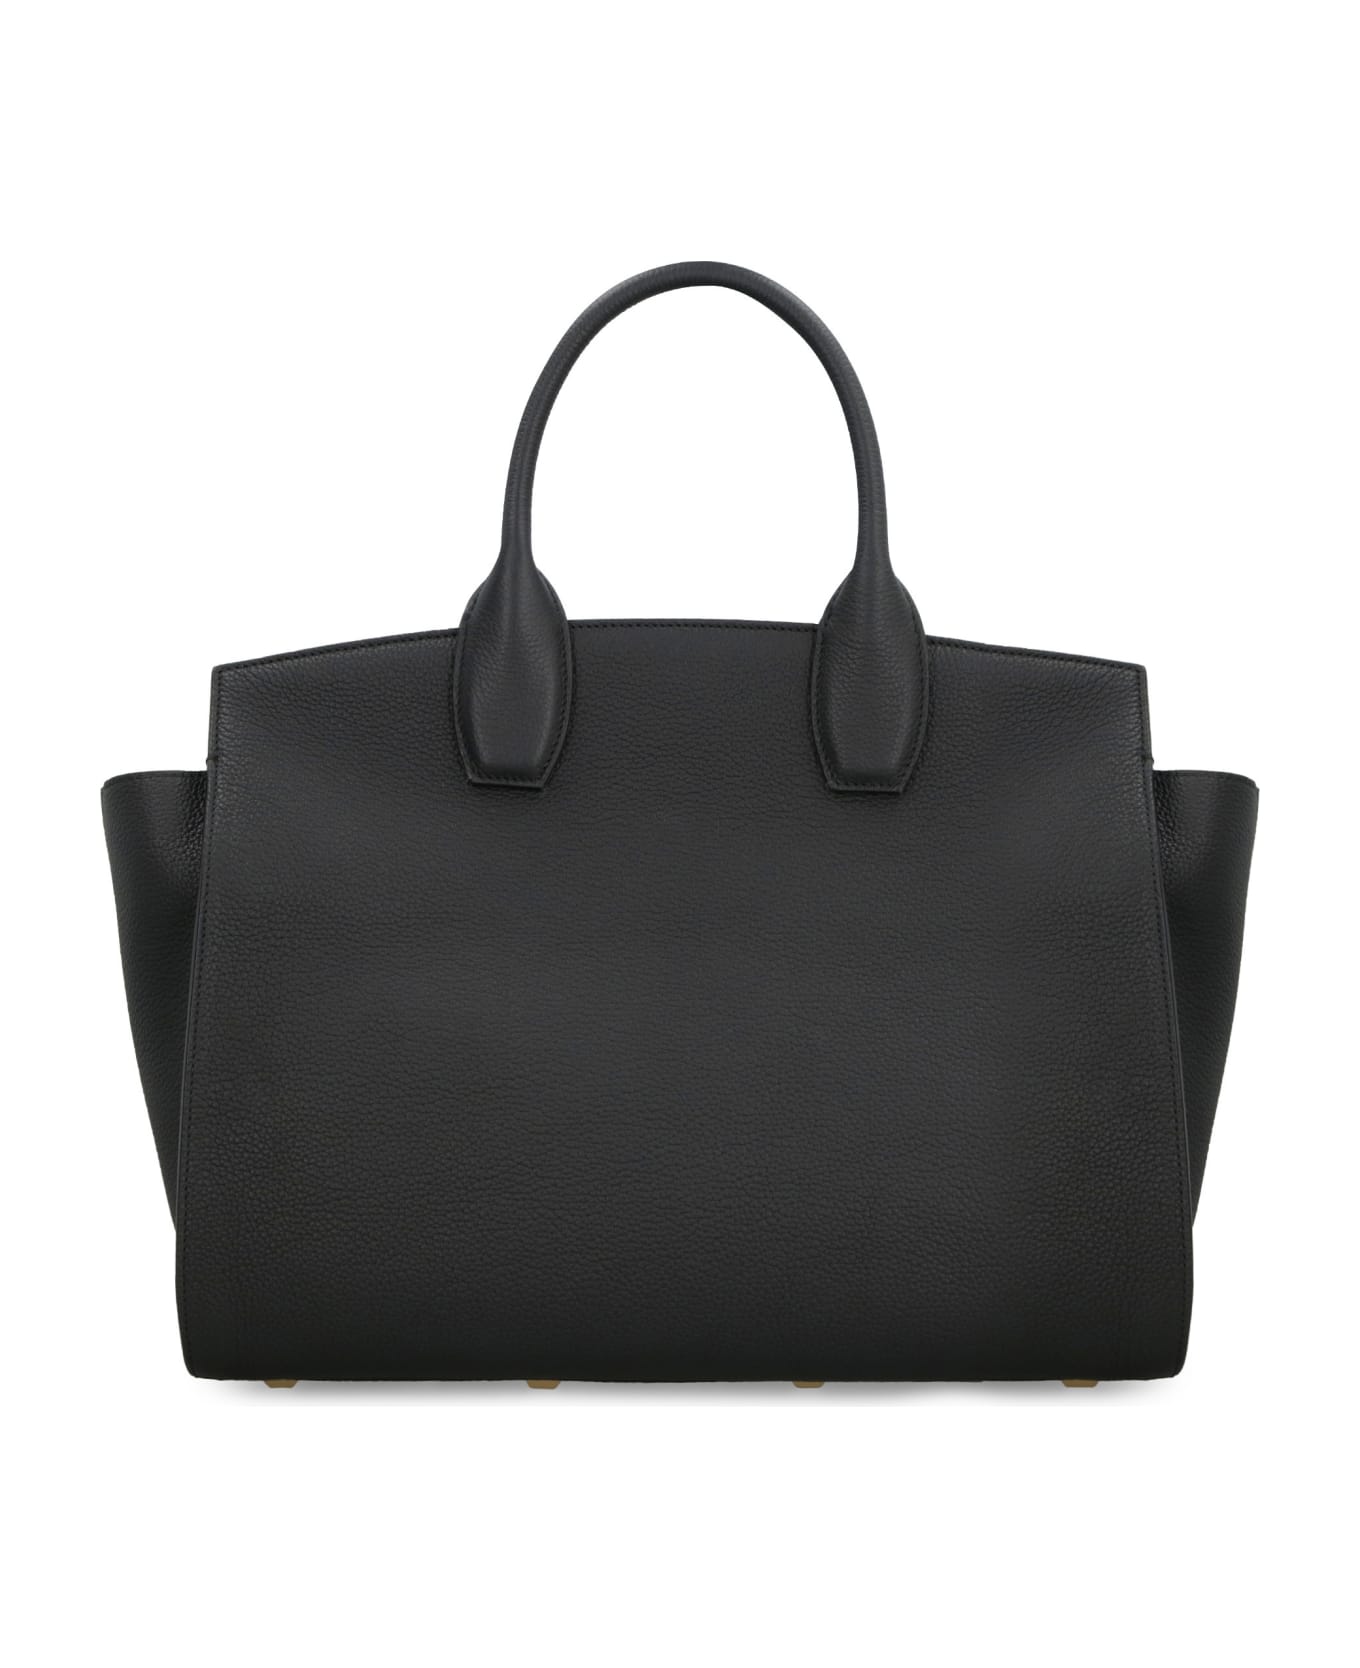 Ferragamo Studio Soft Leather Handbag - black